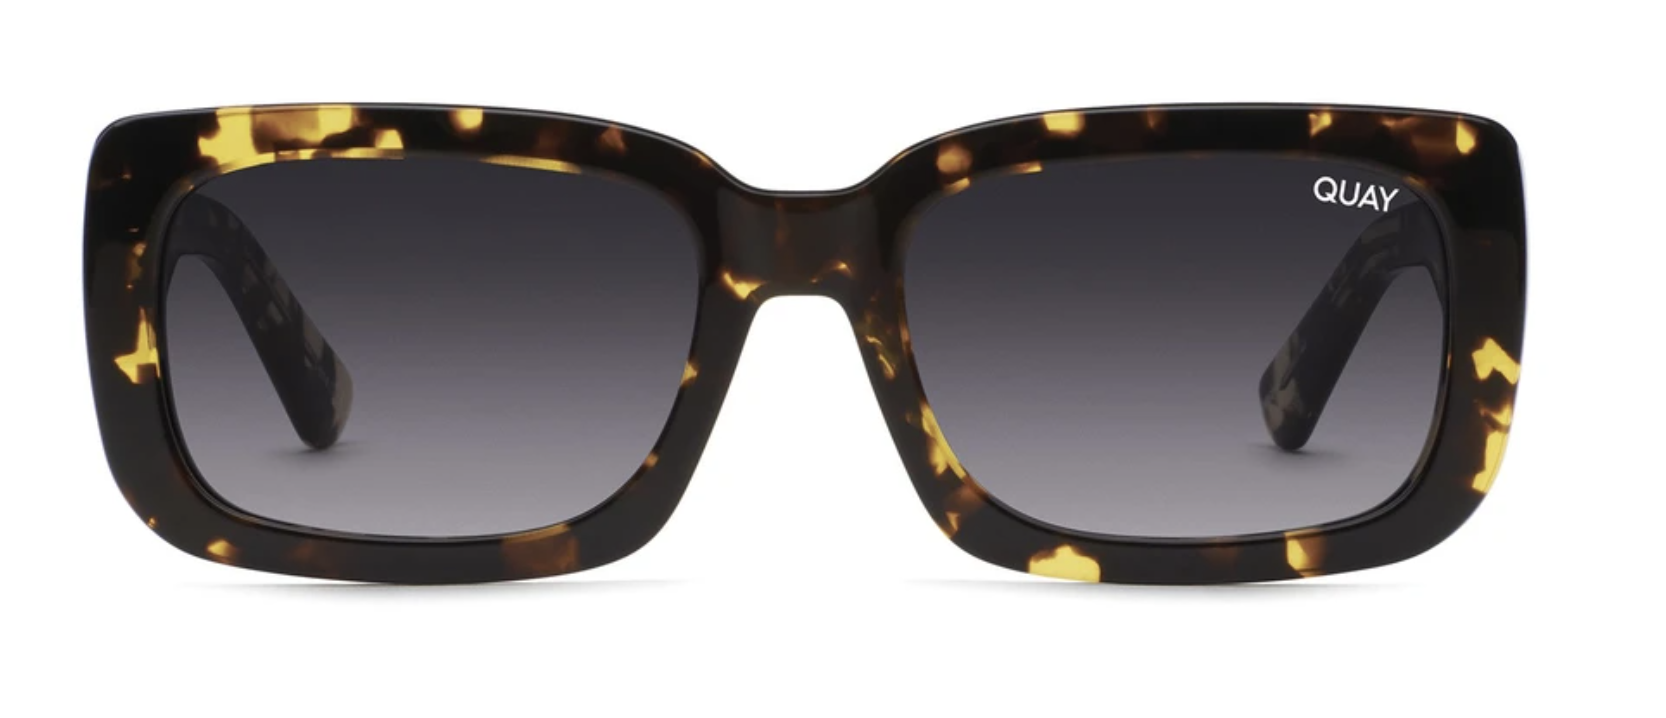 Quay’s BOGO Sale: Stock Up on Sunglasses + Jewelry